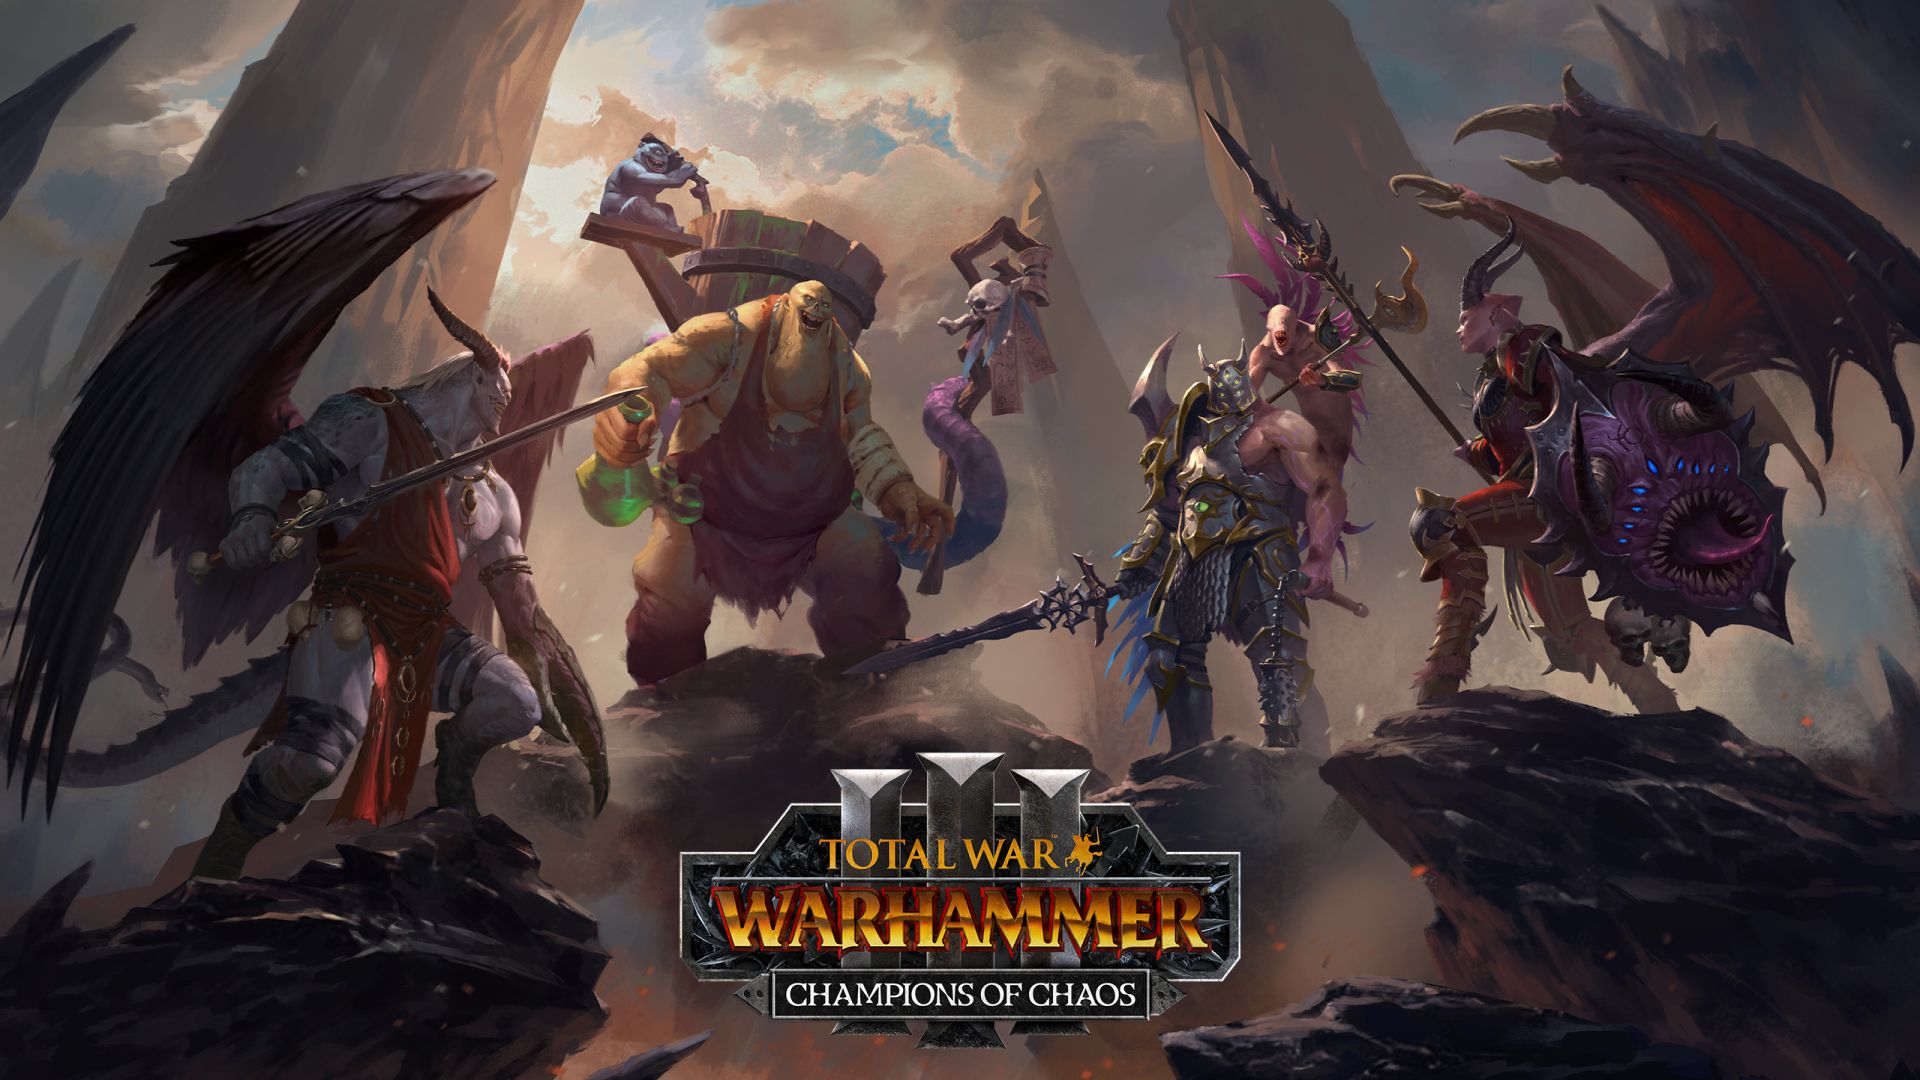 Stigao Total War: Warhammer 3 Champions of Chaos DLC